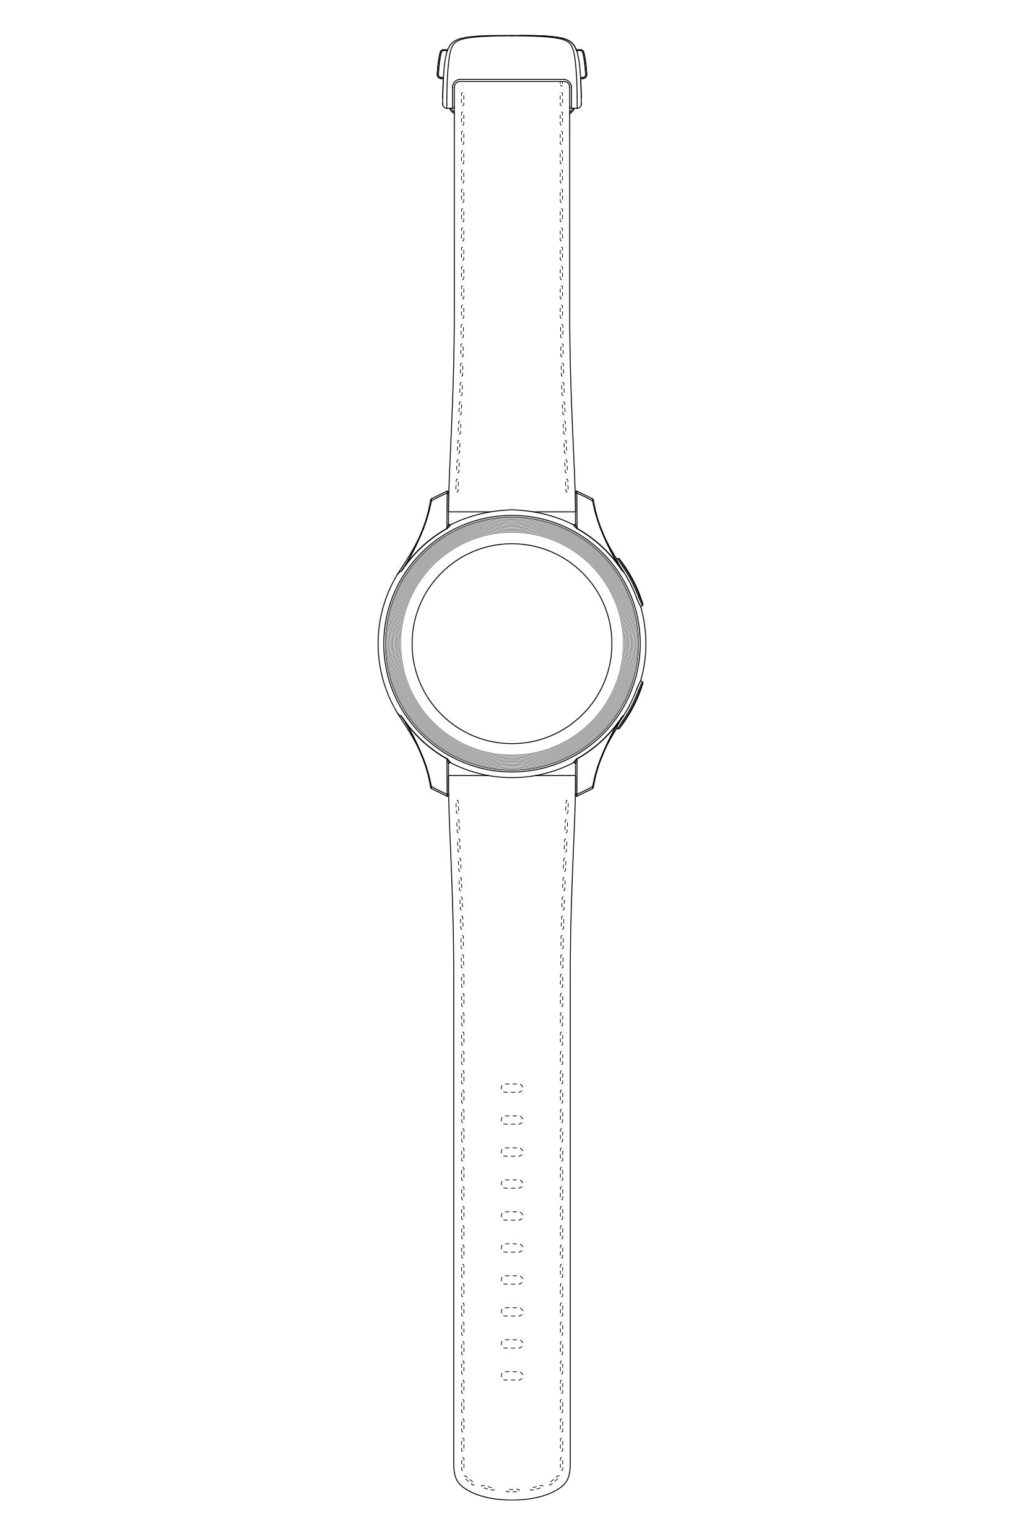 oneplus-watch-patent-1-1024x1536.jpg